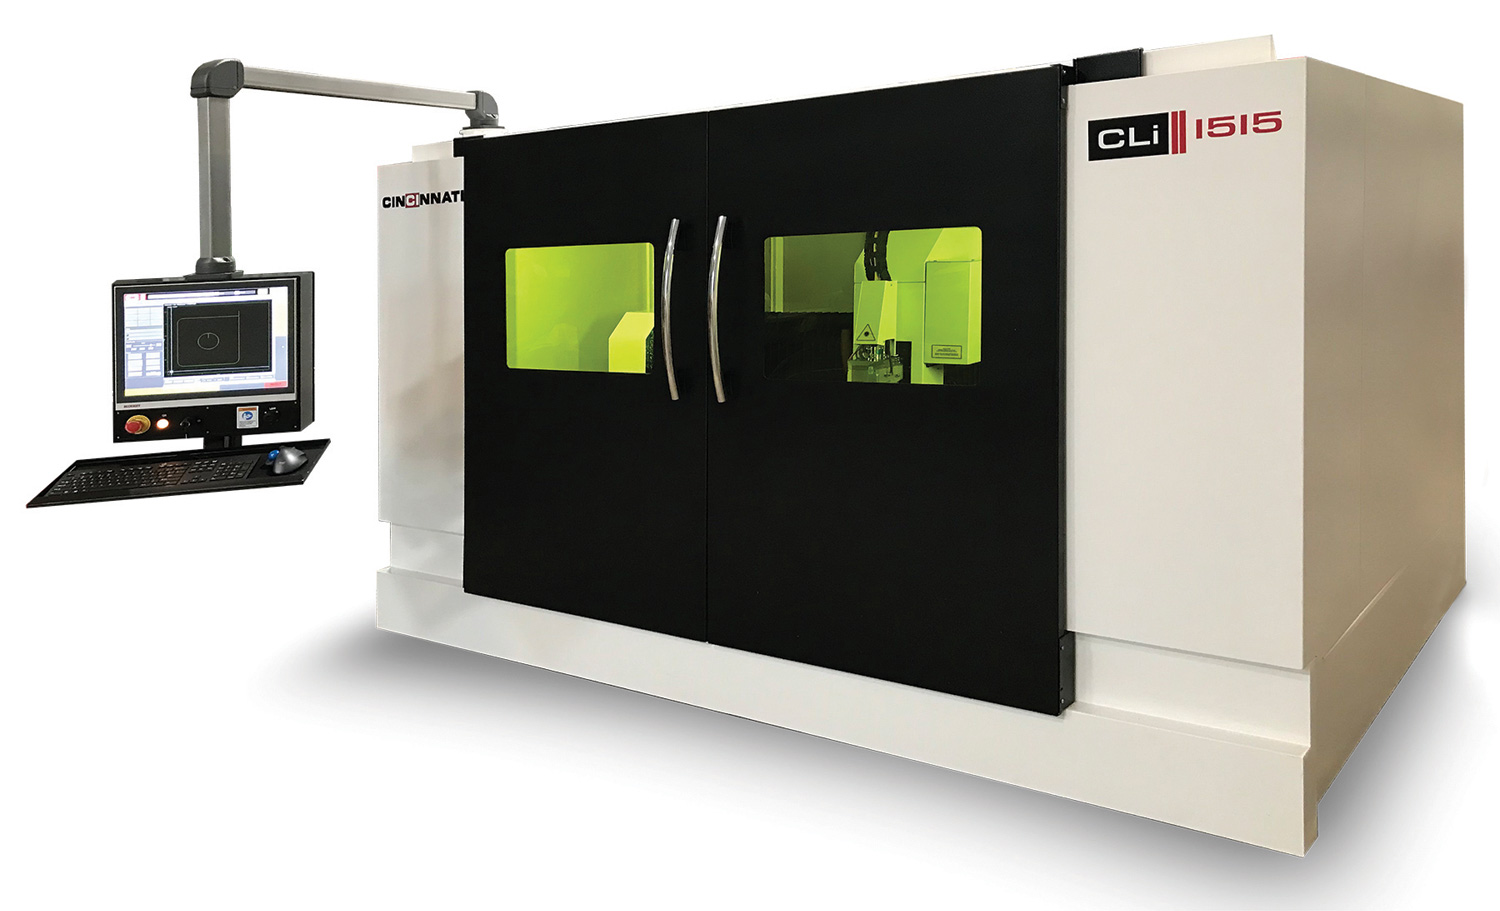 the CLi fiber laser from Cincinnati Inc.